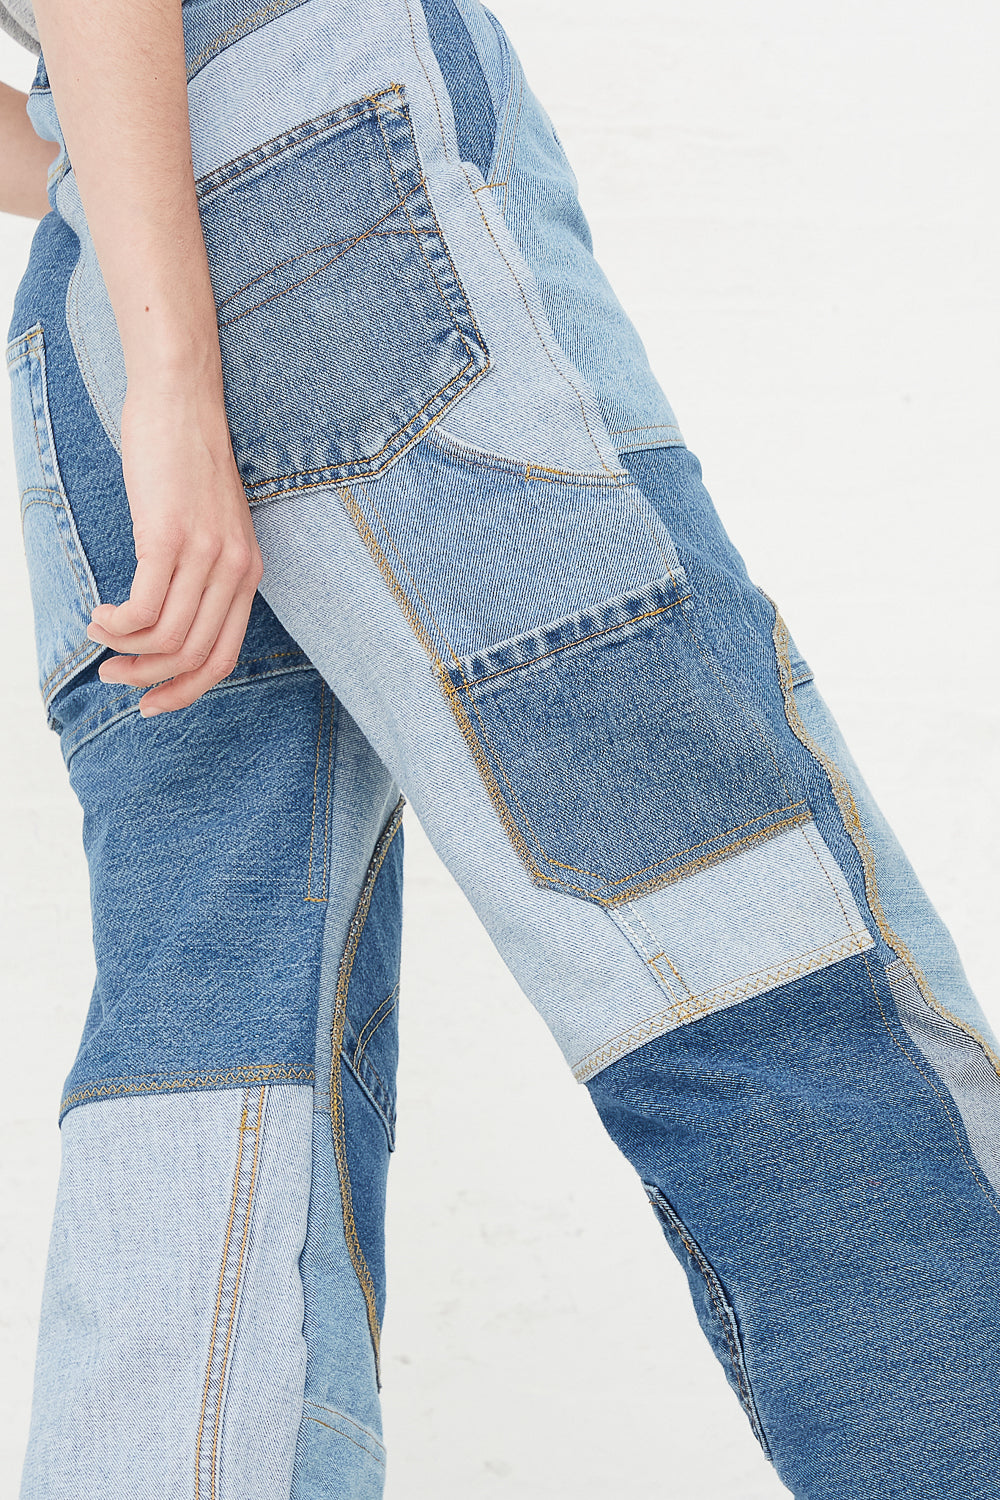 WildRootz - Reworked Jeans in Blue Variation A - S back side leg pocket detail